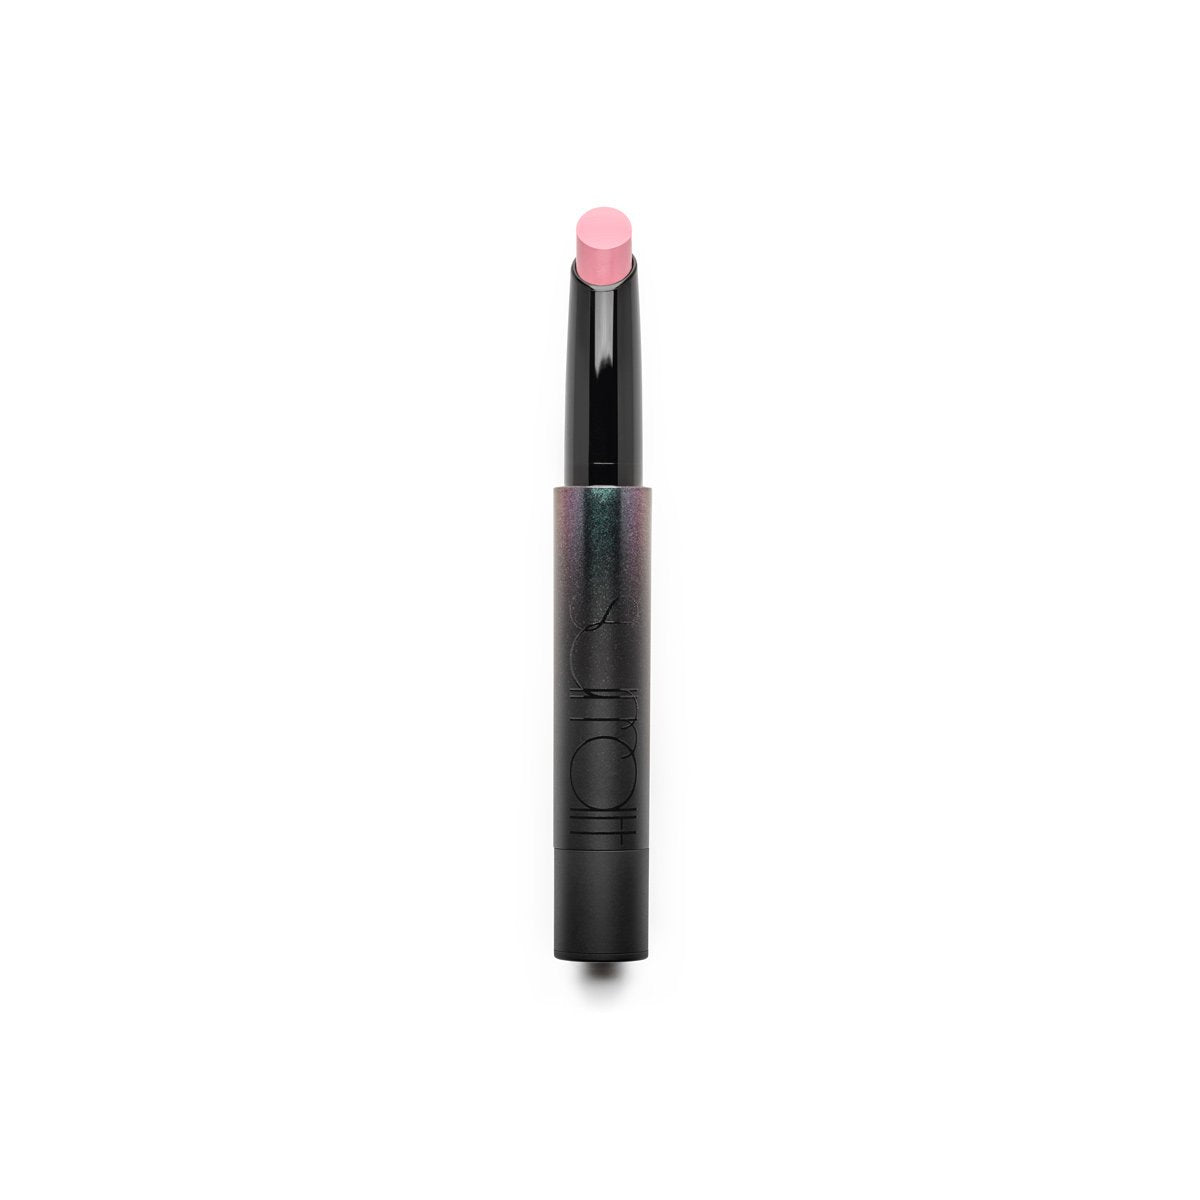 BON BON - SHEER BABY PINK - creamy moisturizing lipstick lip balm in sheer baby pink shade